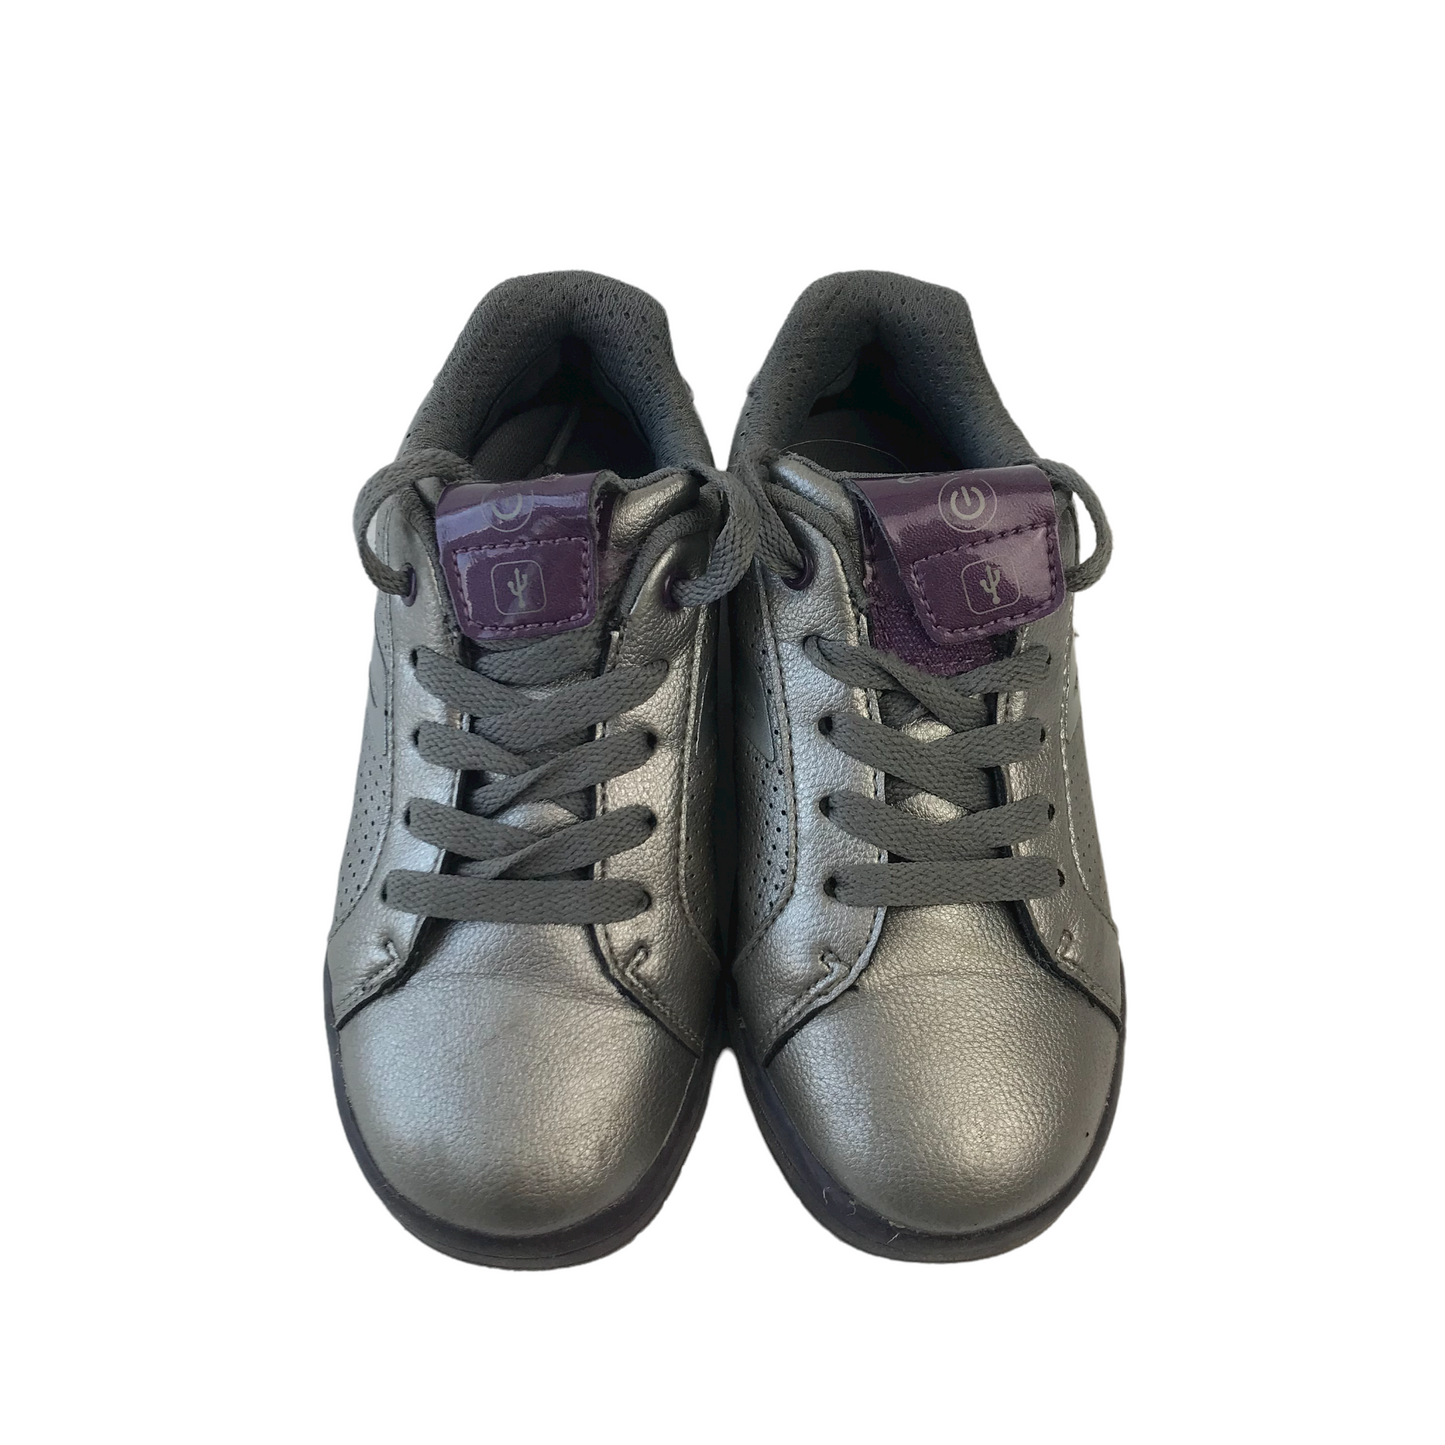 Geox Grey Metallic Shine Trainers Shoe Size 11 (jr)